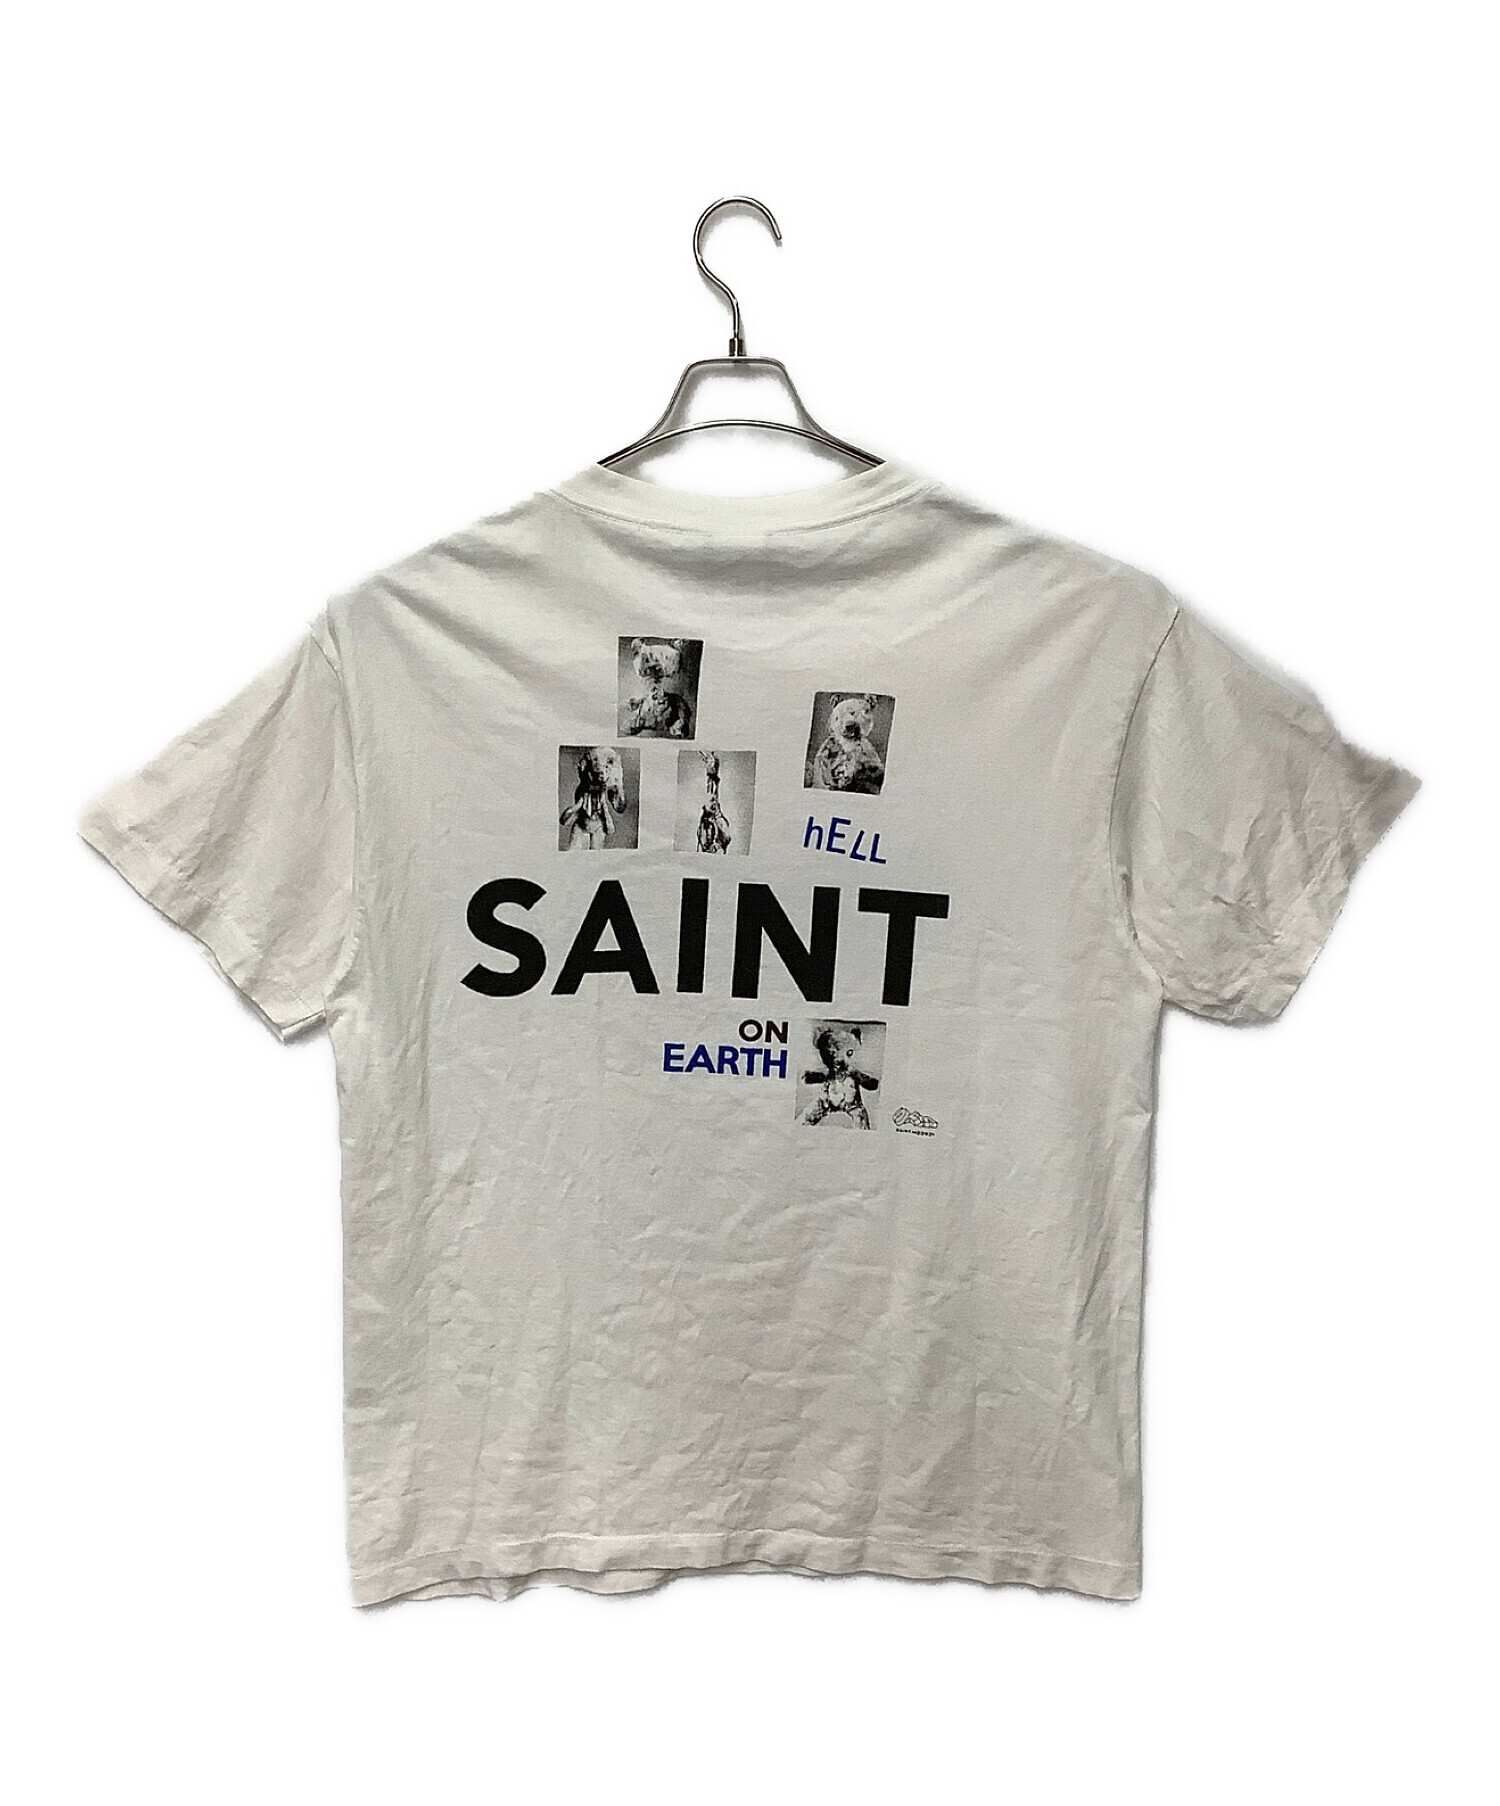 saint michael セントマイケル tシャツ - www.stedile.com.br